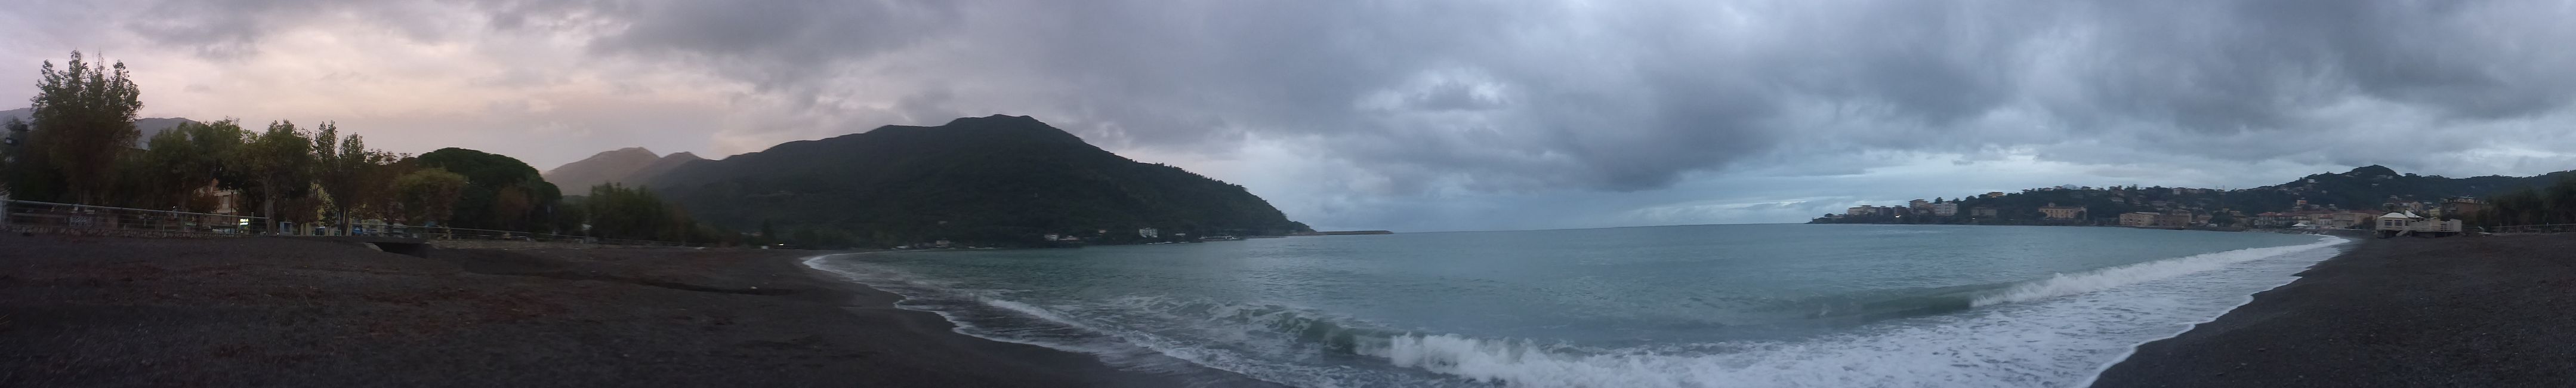 The bay of Sapri on the rainy day